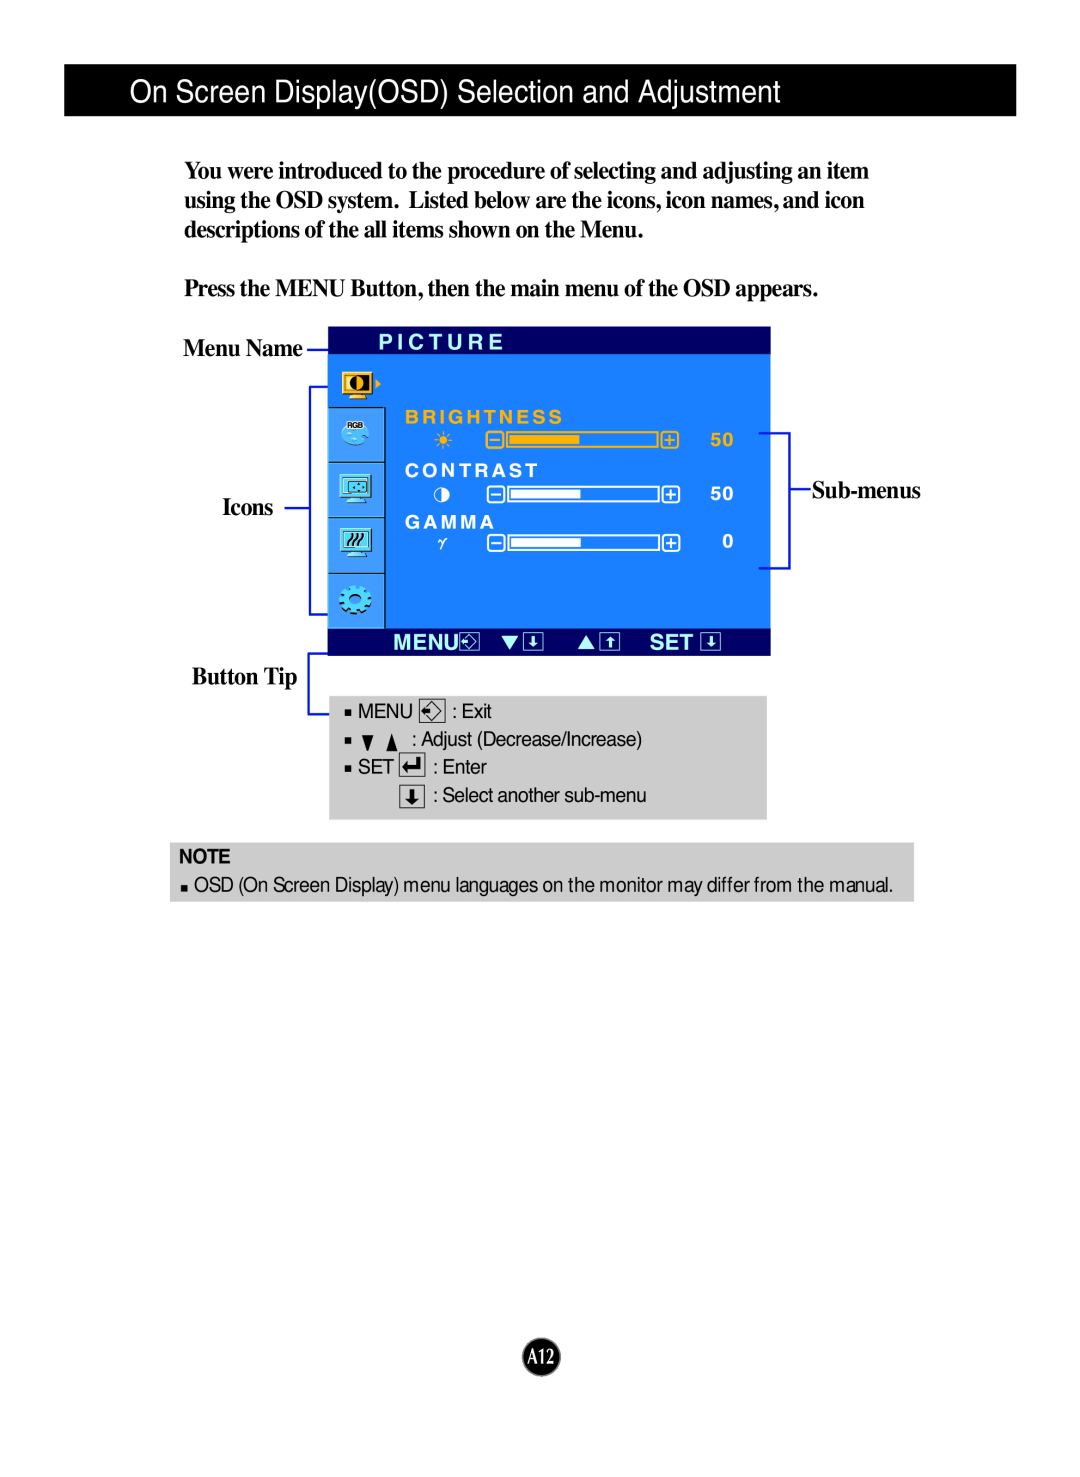 LG Electronics L1753TX Menu Name Icons Button Tip, Sub-menus, On Screen DisplayOSD Selection and Adjustment, P I C T U R E 